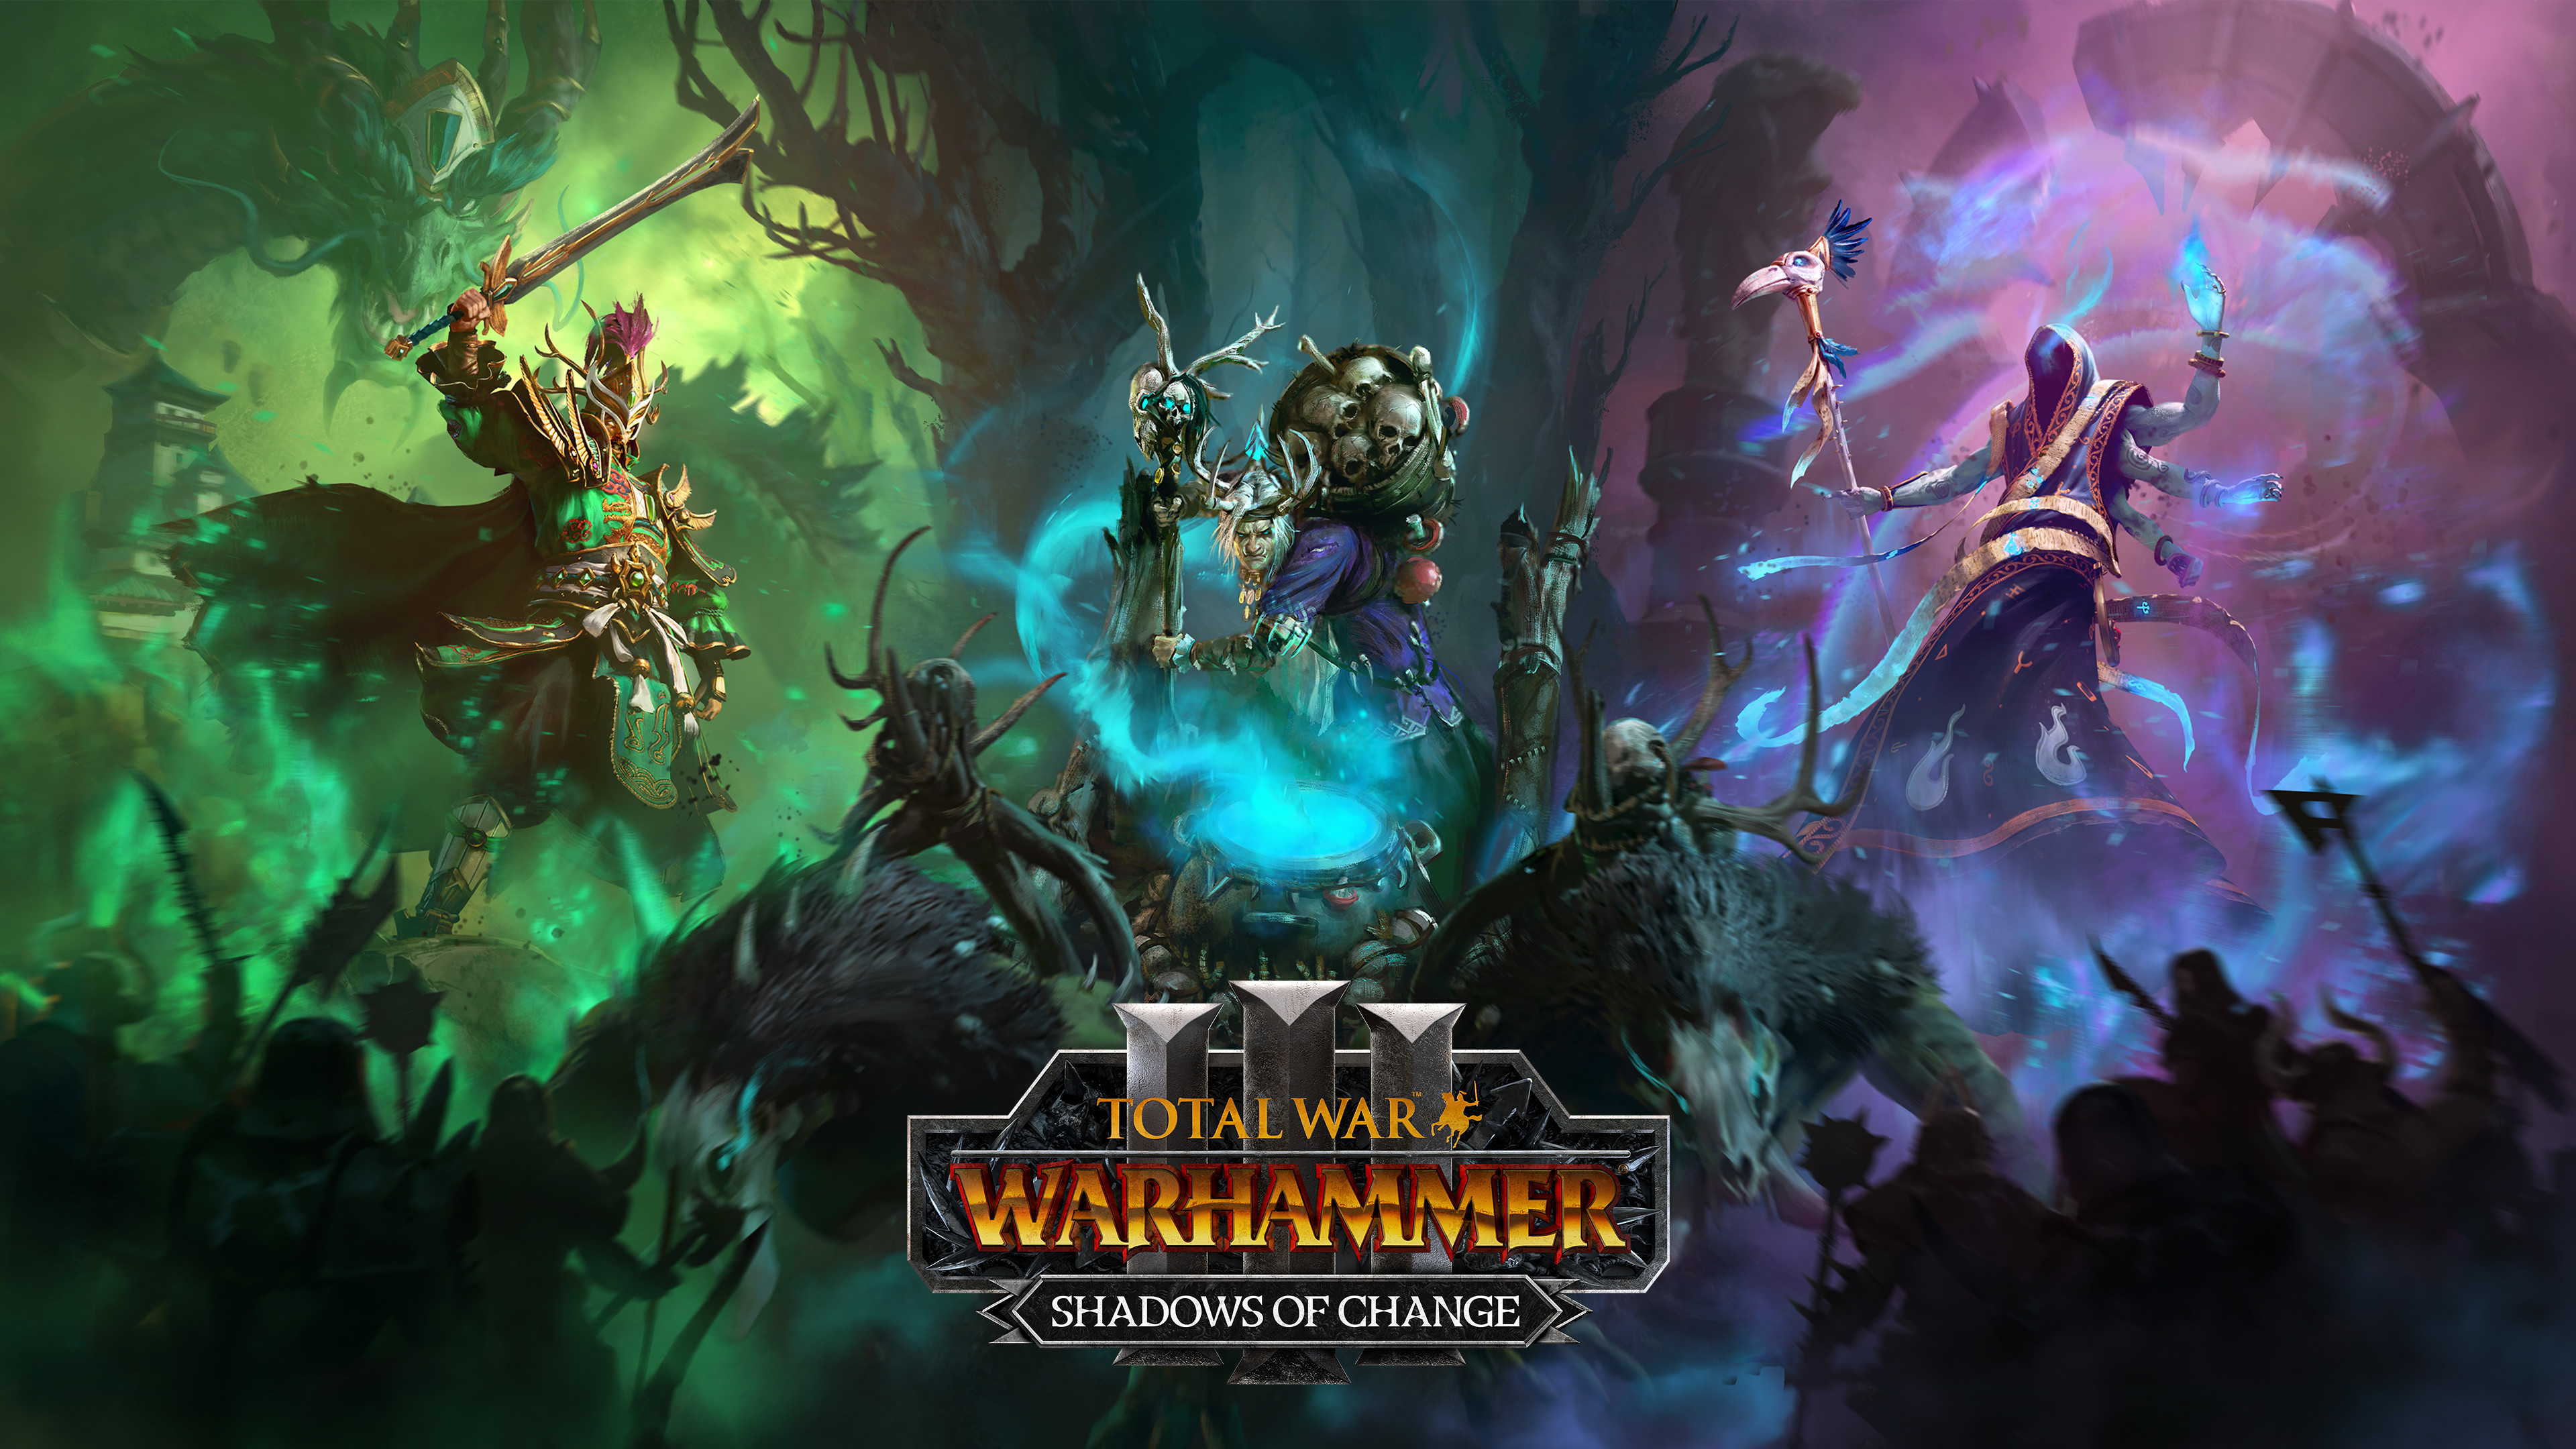 Total War: Warhammer 3 Shadows of Change artwork.